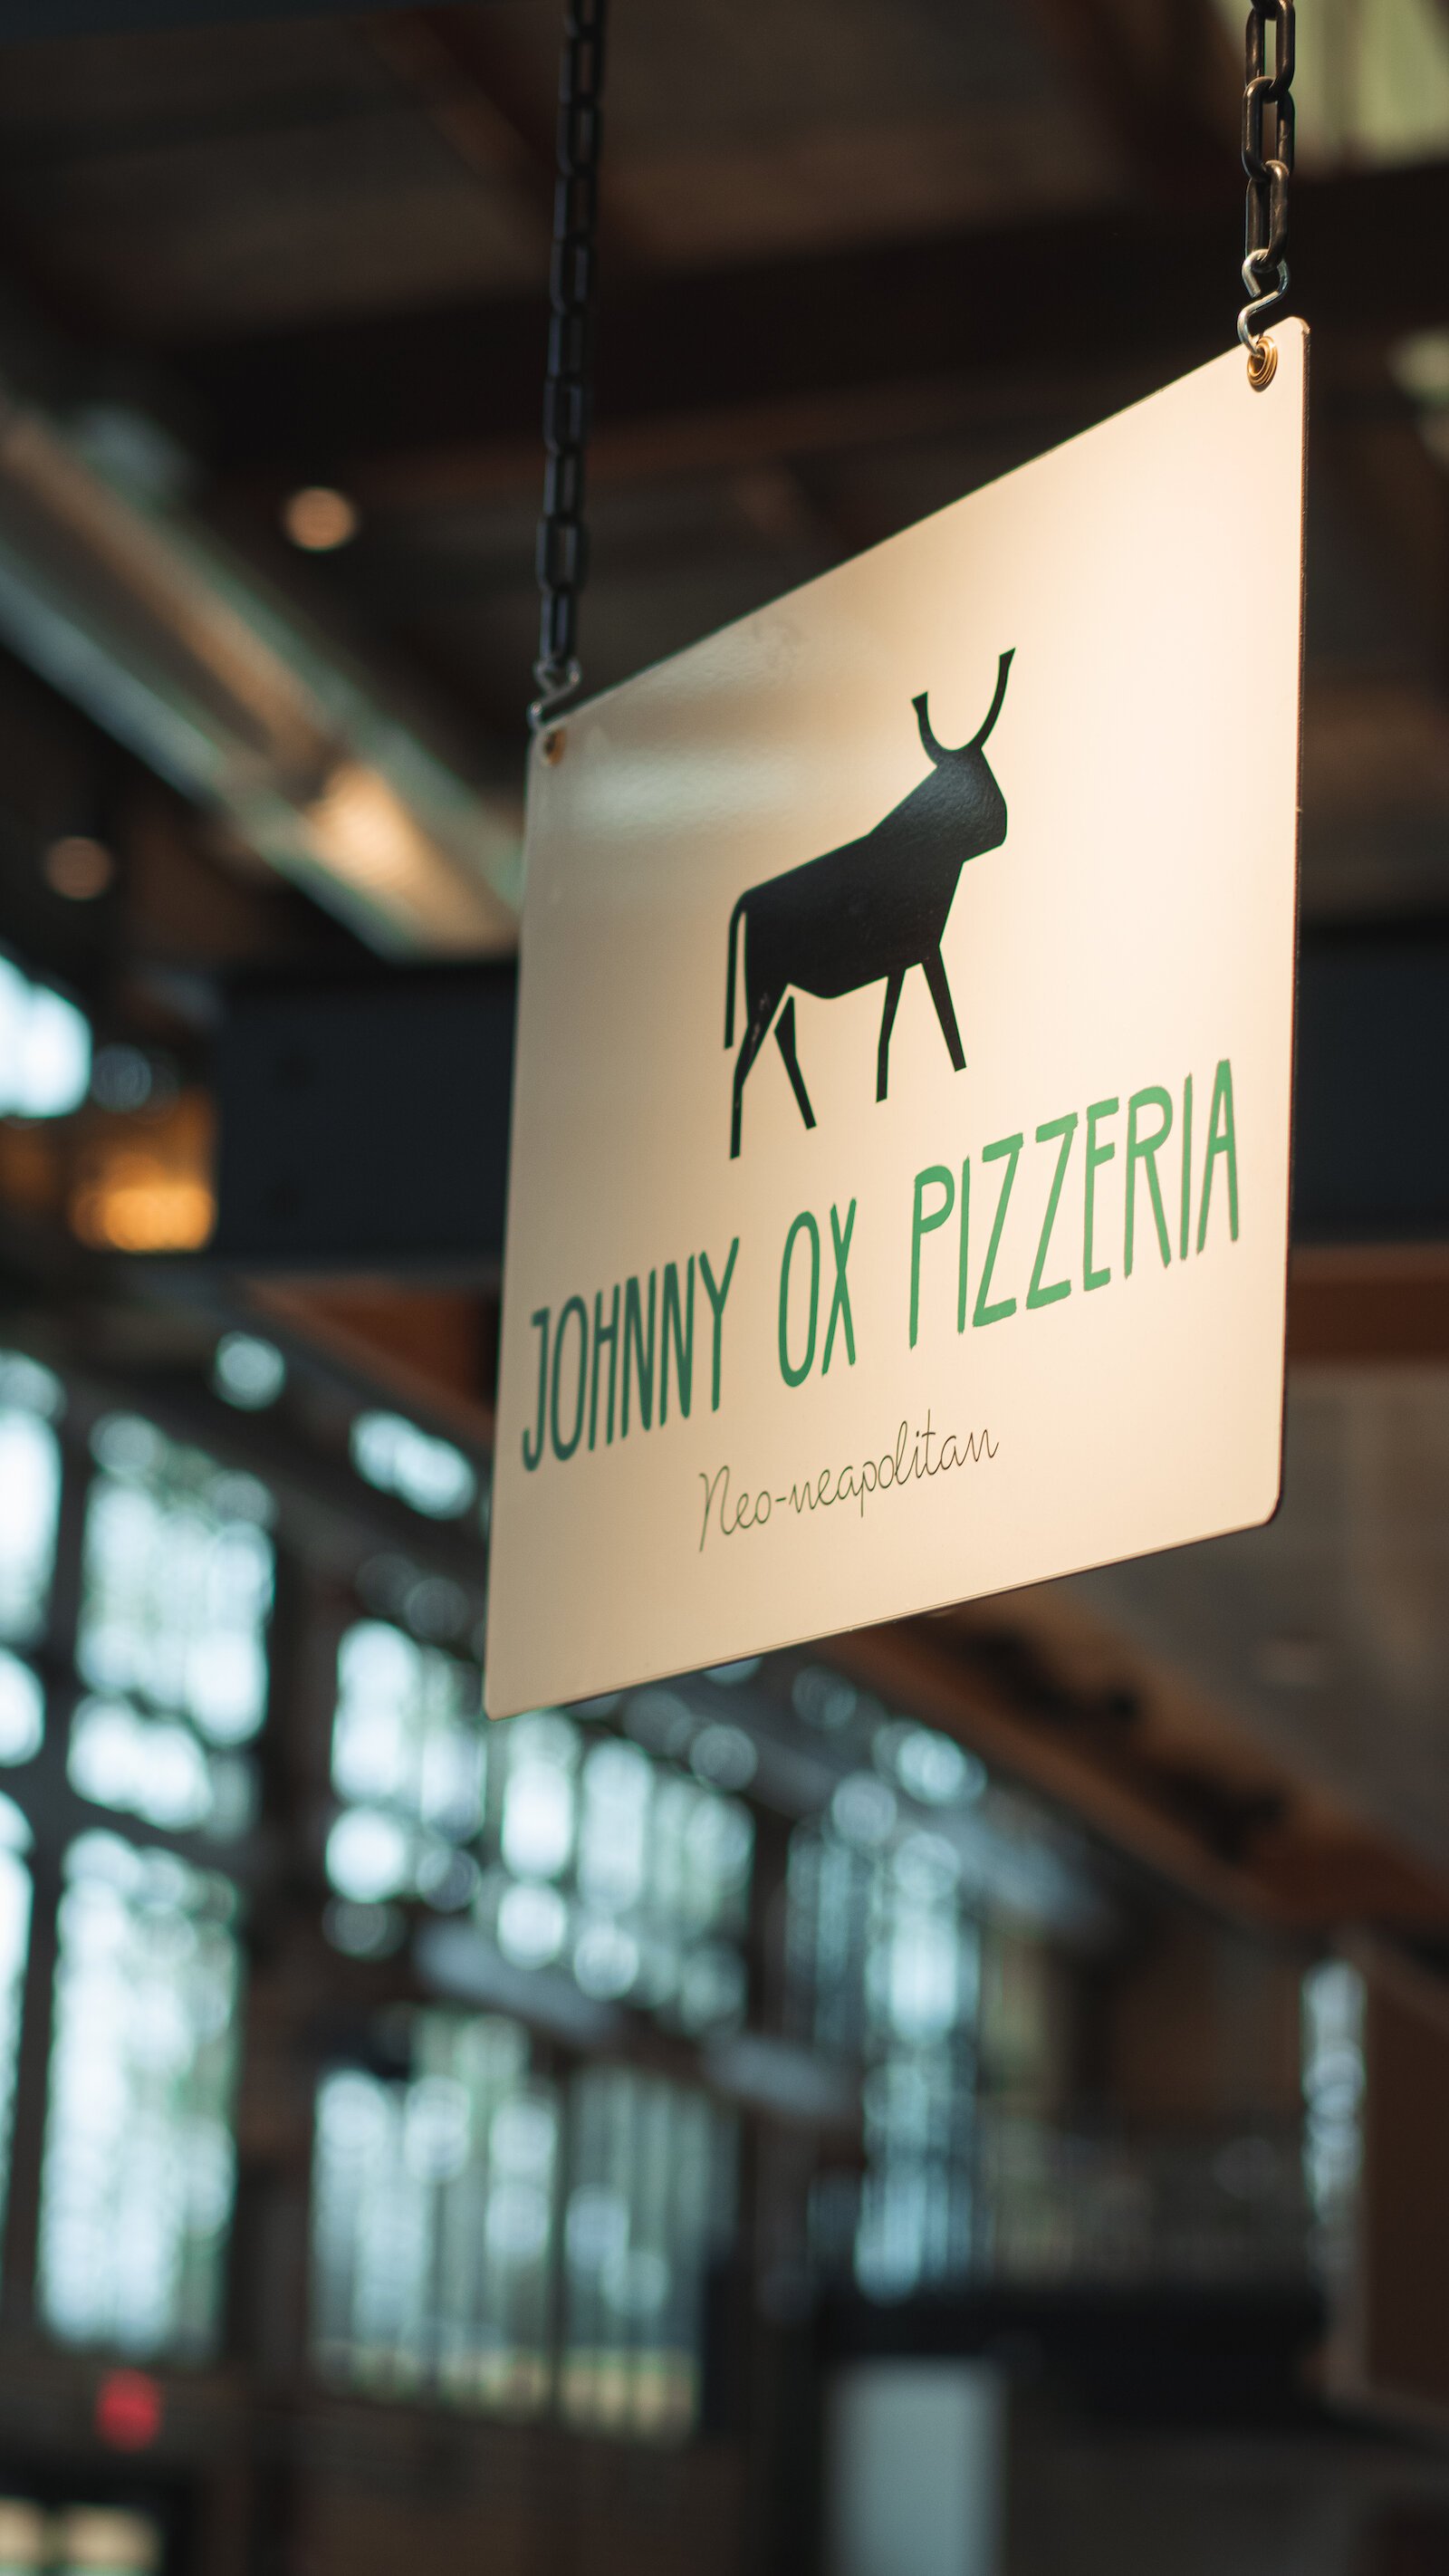 Johnny OX Pizzeria at the Union Street Market.